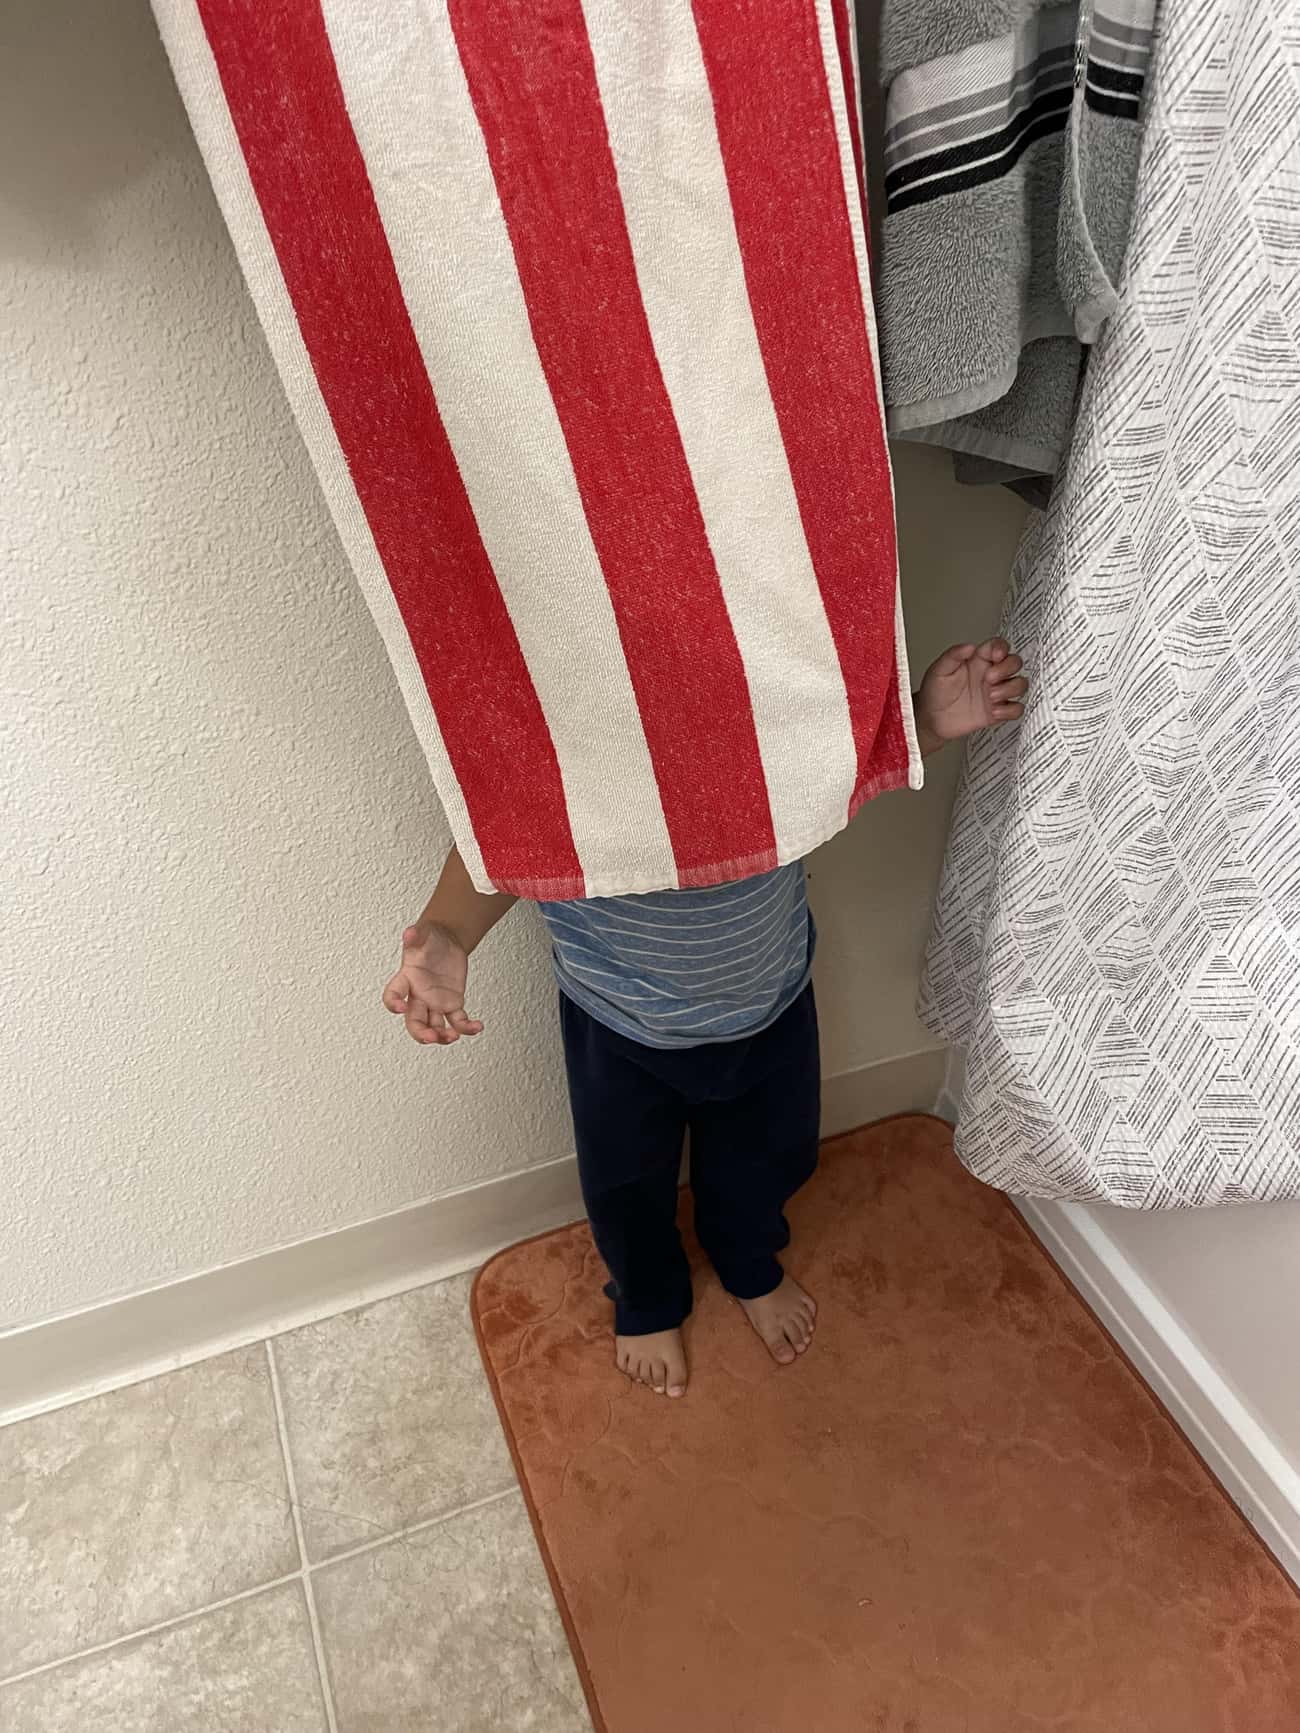 My Son's Usual Hiding Spot To Avoid The Bath